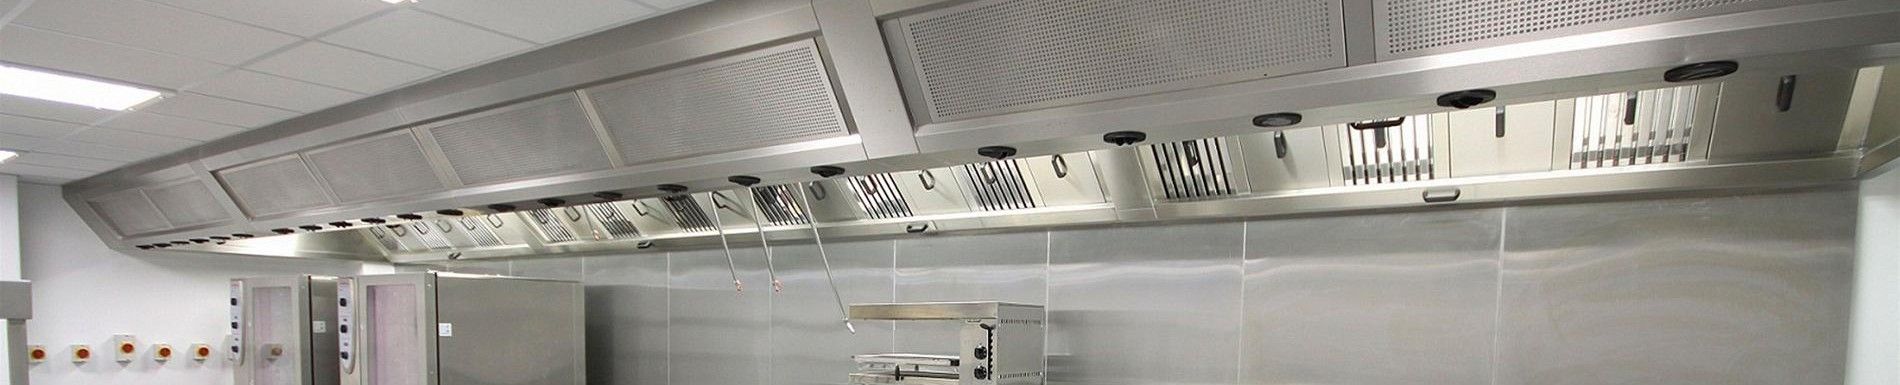 A fully installed Kitchen Ventilation system